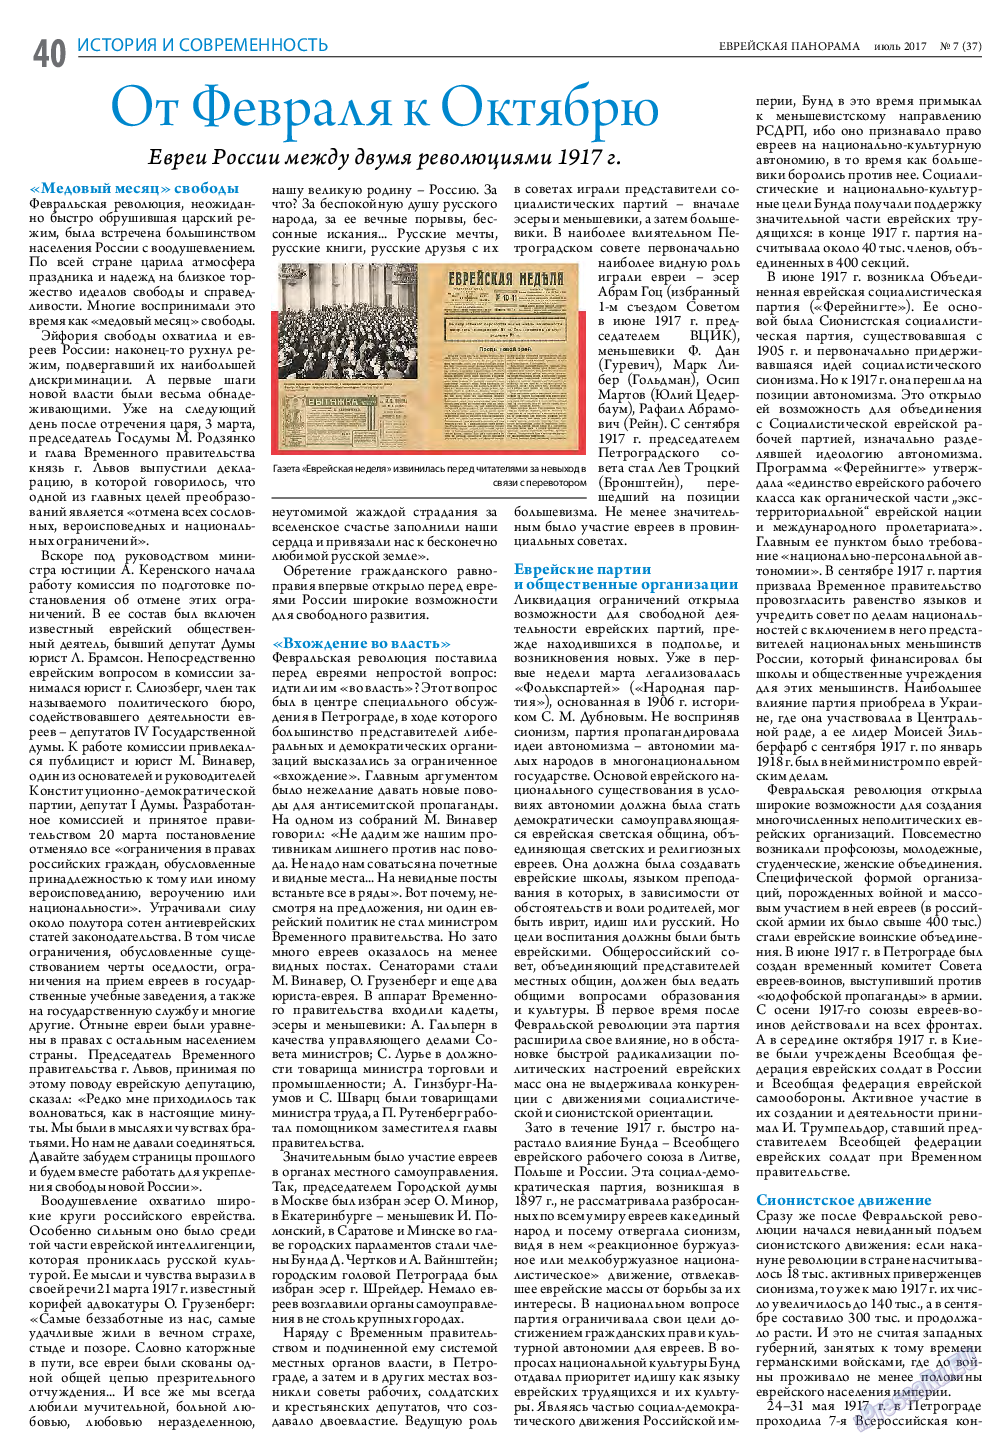 Еврейская панорама, газета. 2017 №7 стр.40